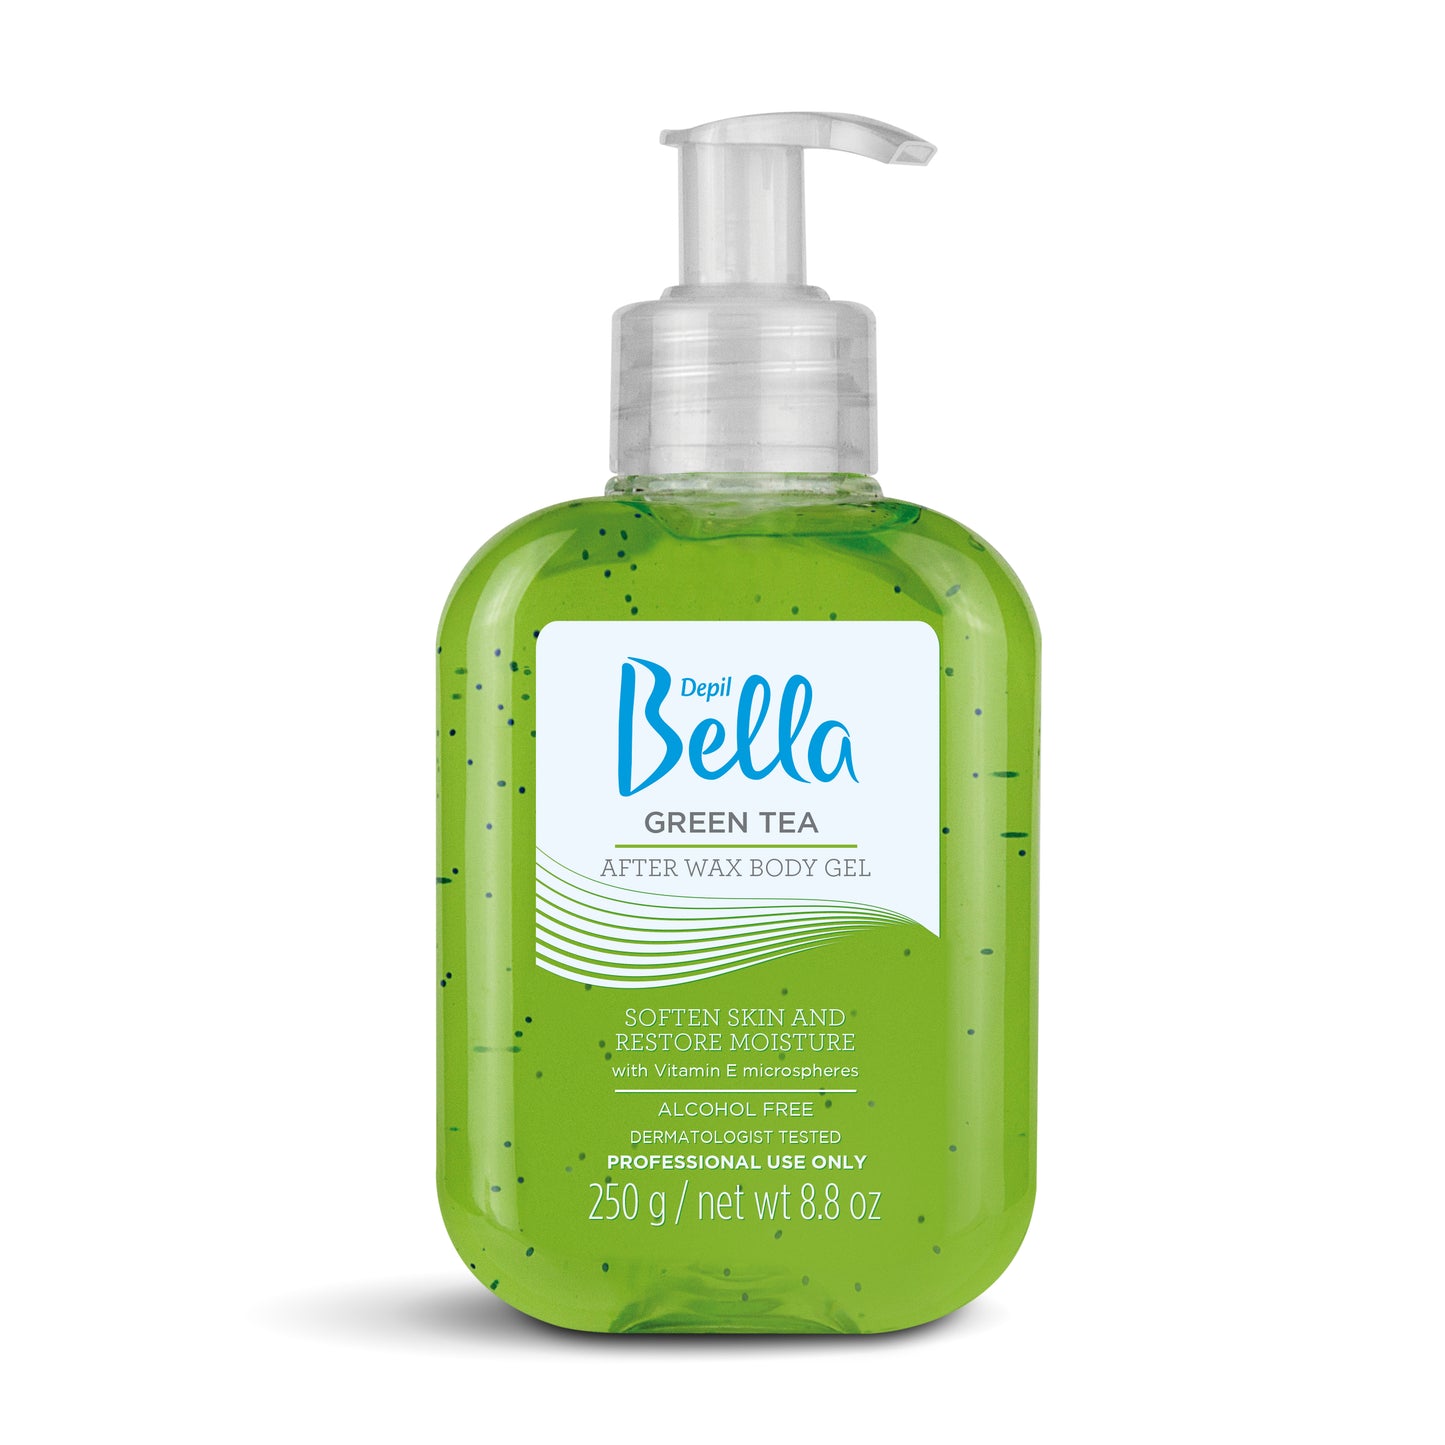 Depil Bella After Wax Body Gel Green Tea 250g - Depilcompany